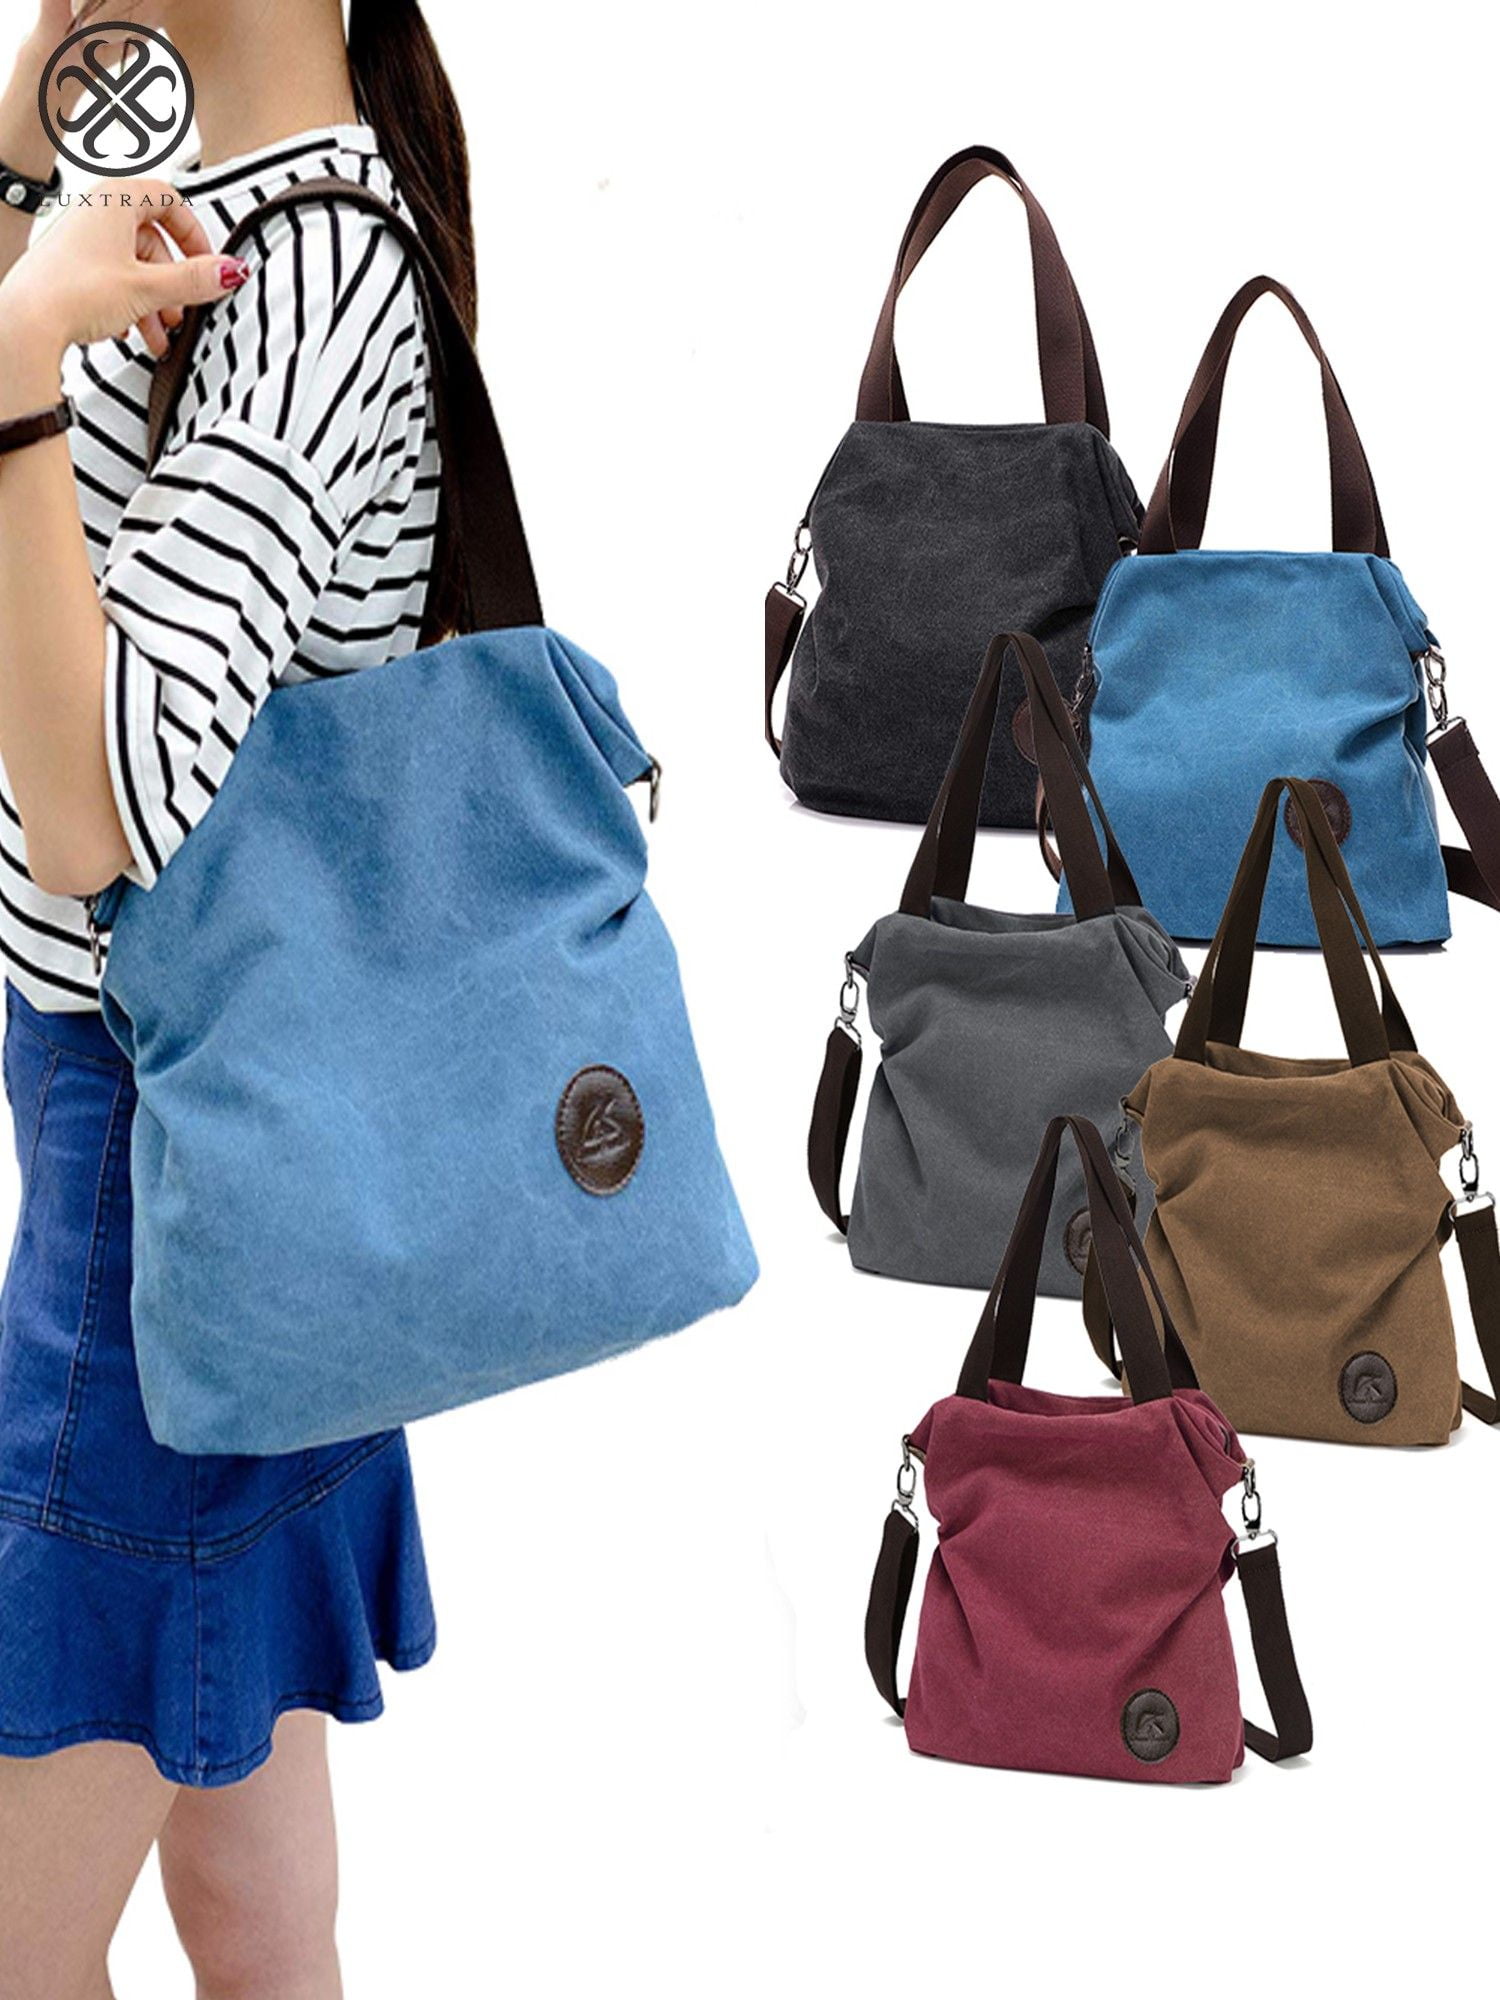 Luxtrada Women's Canvas Vintage Shoulder Bag Hobo Daily Purse Large ...